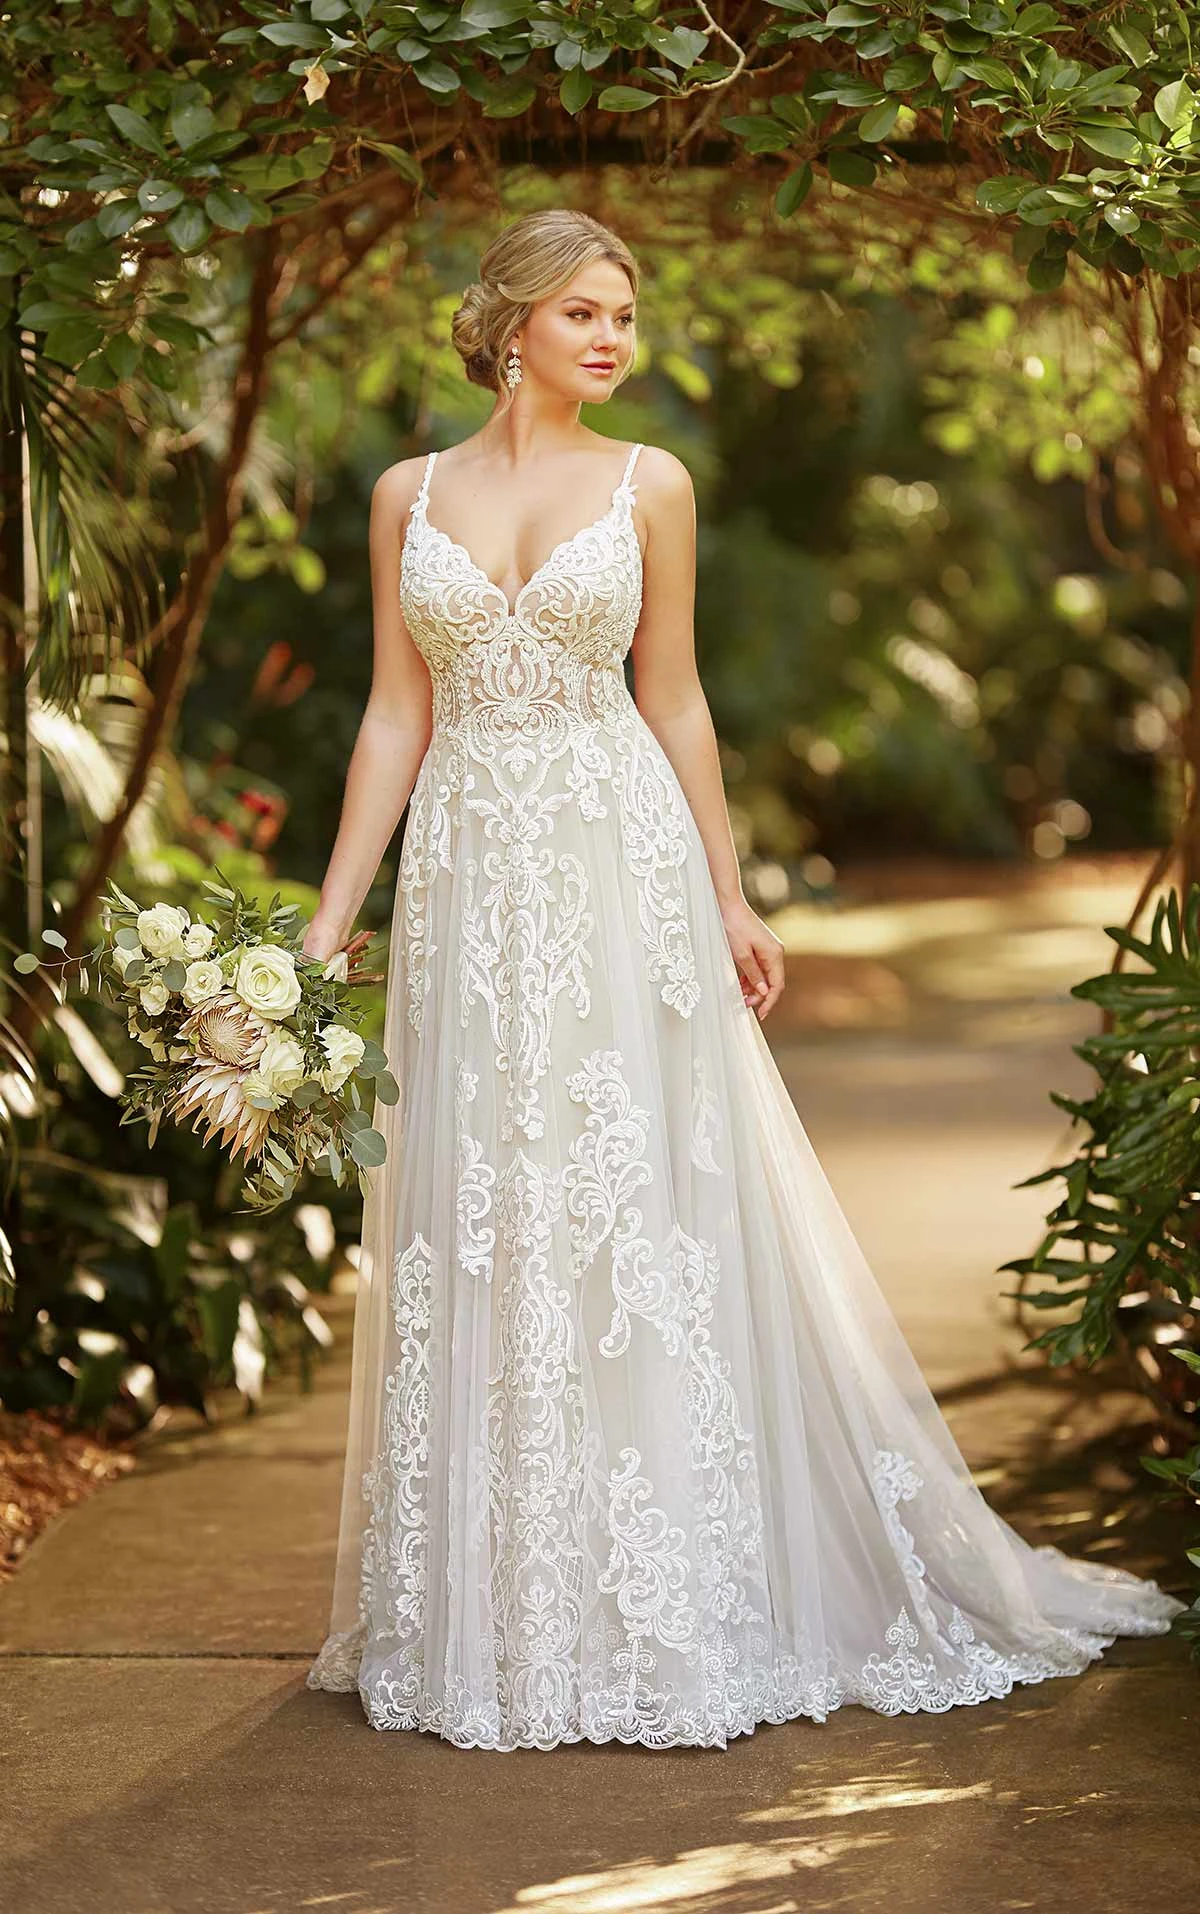 Sheer Lace ALine Wedding Dress